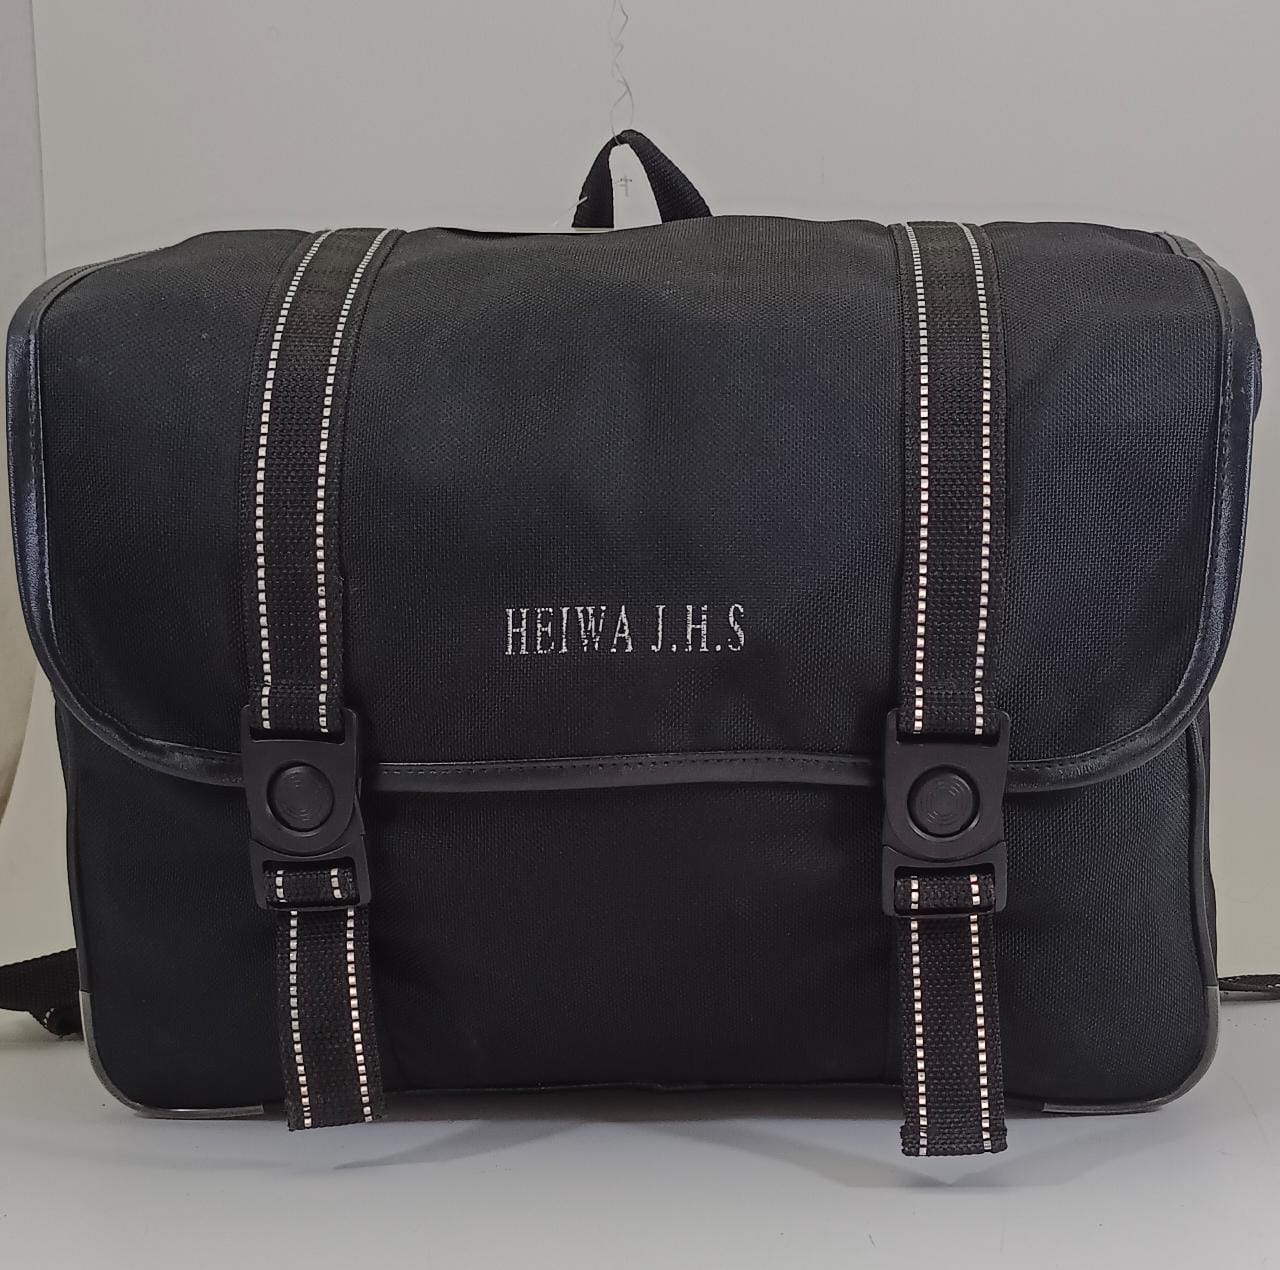 Heiwa j.h.s School Bag